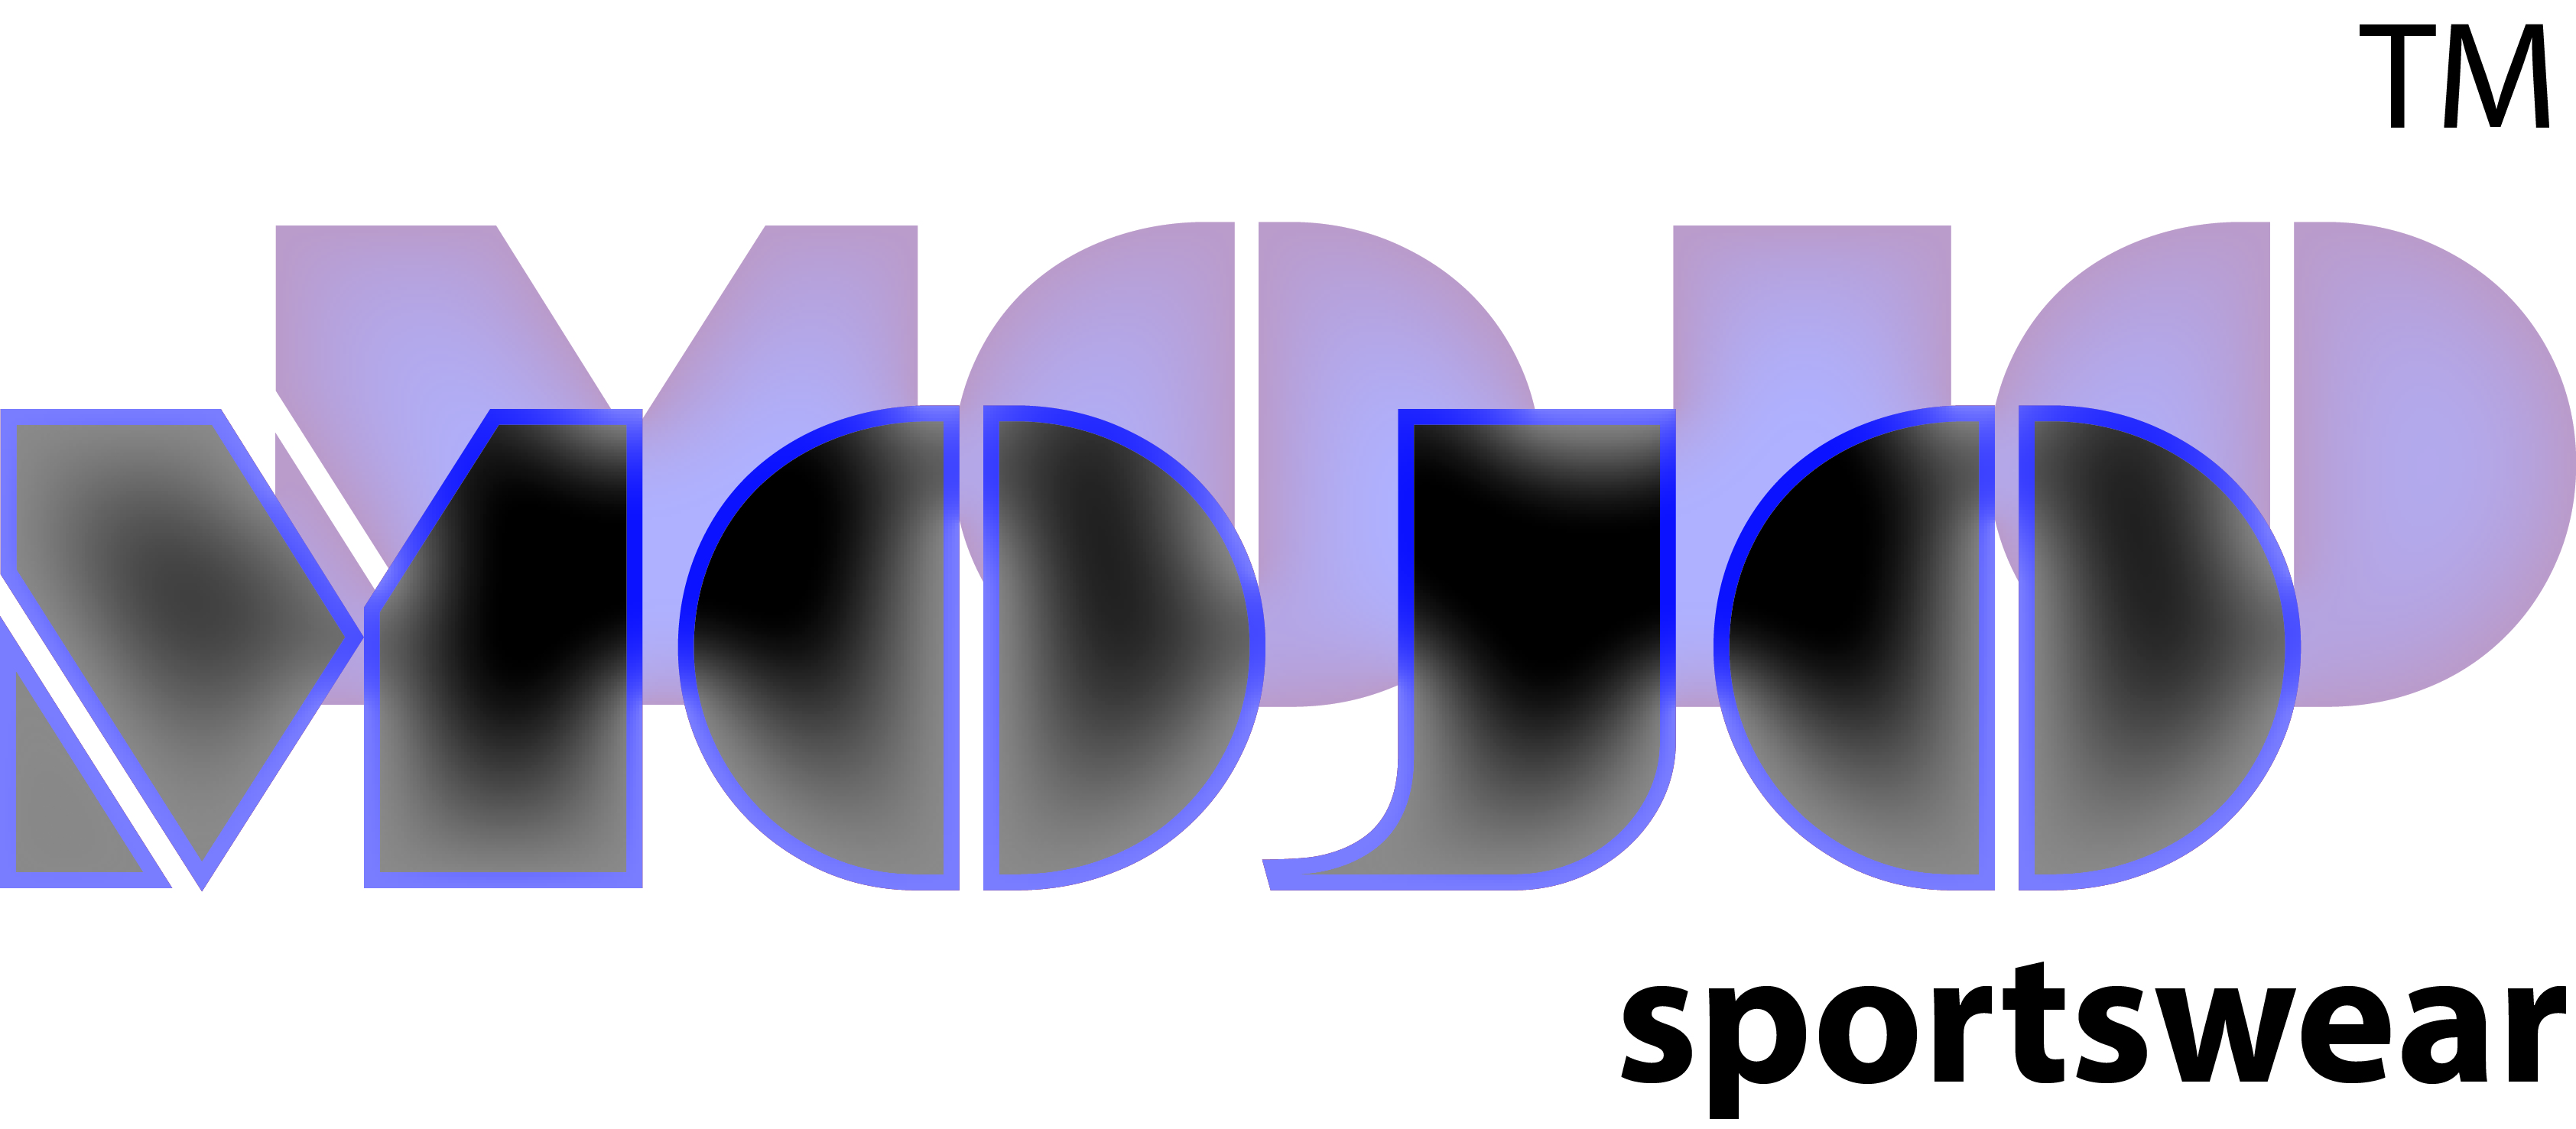 dc mojo - dropped soft cast sport logo